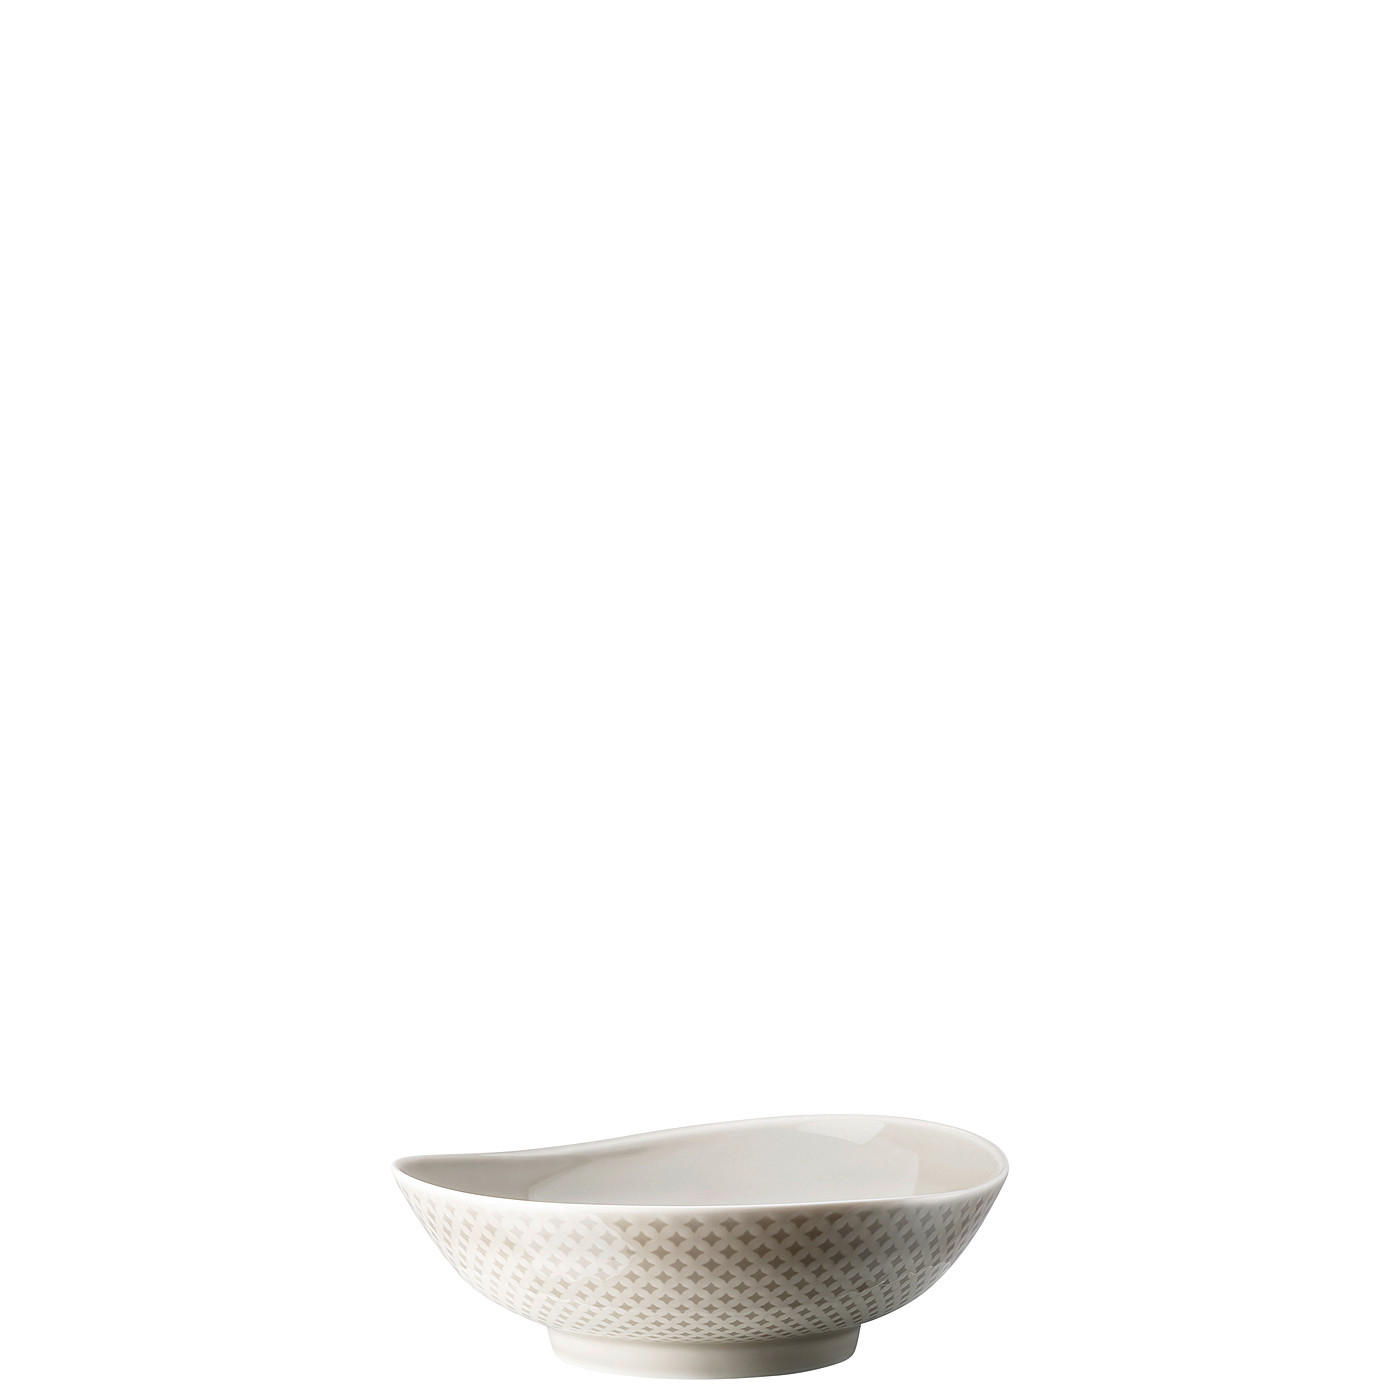 SCHALE Junto Pearl Grey 15/14,5/5 cm  - Grau, LIFESTYLE, Keramik (15/14,5/5cm) - Rosenthal